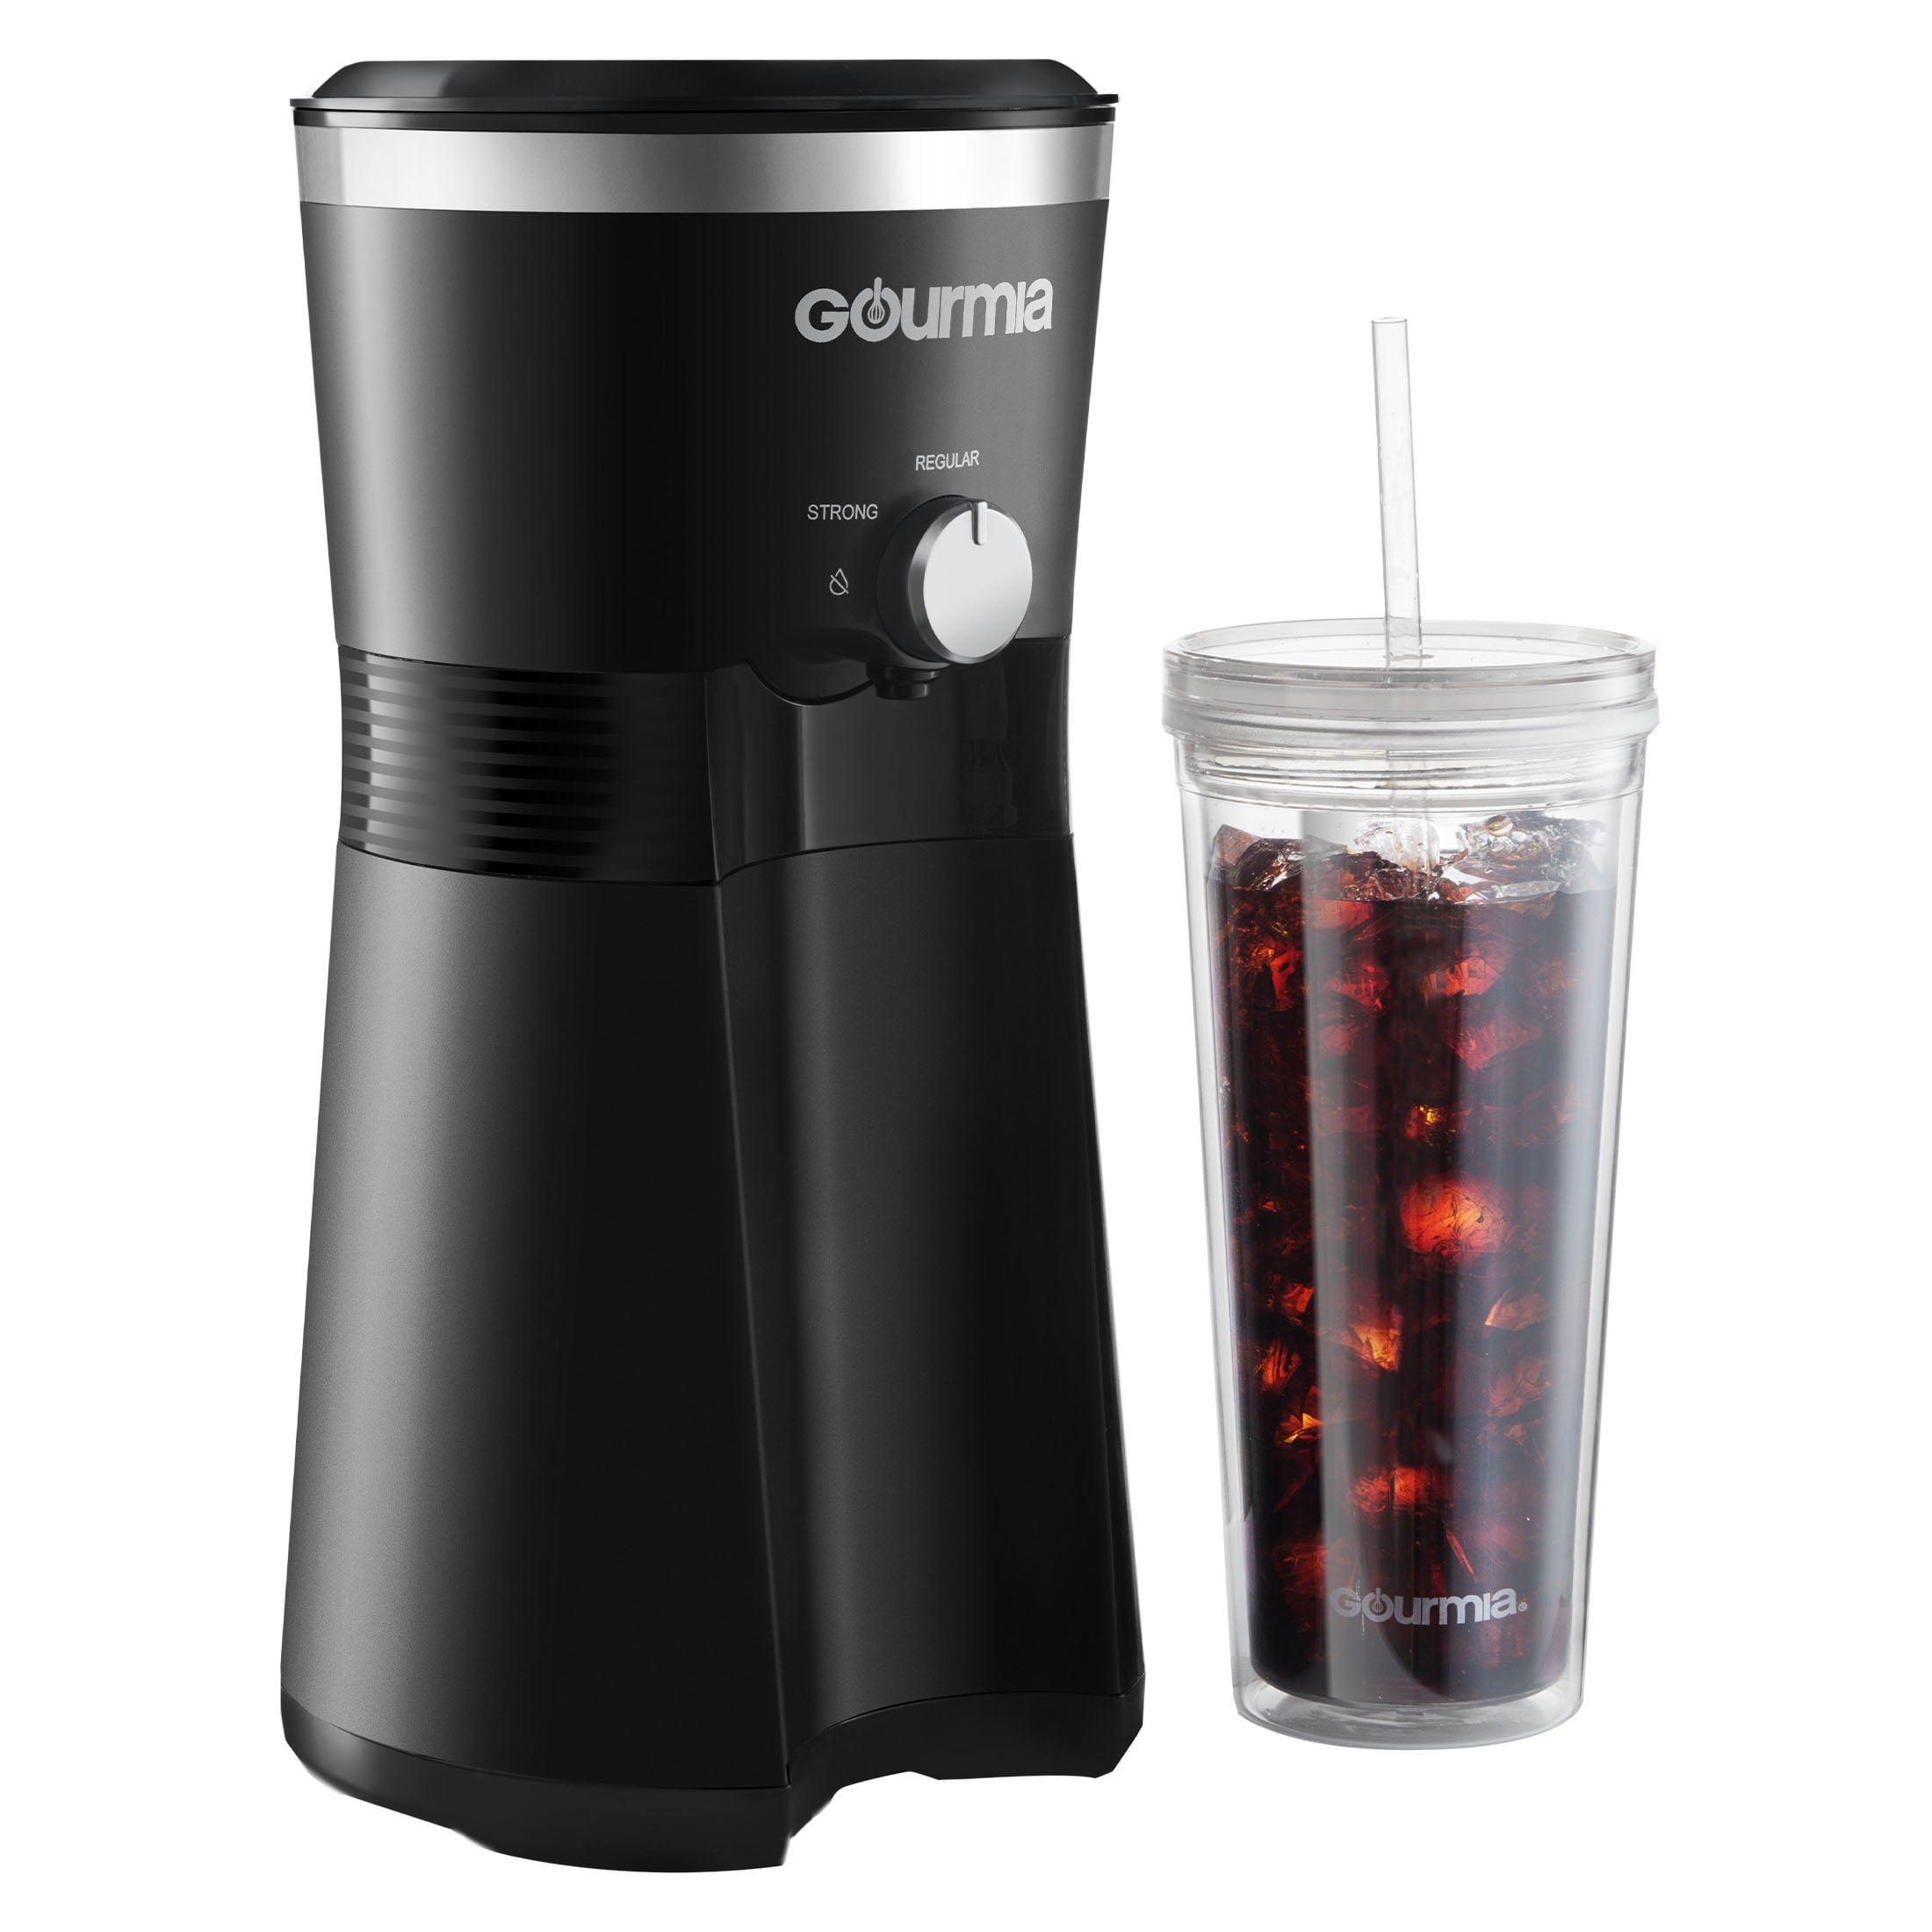 Gourmia Cold Brew Coffee Maker - Macy's